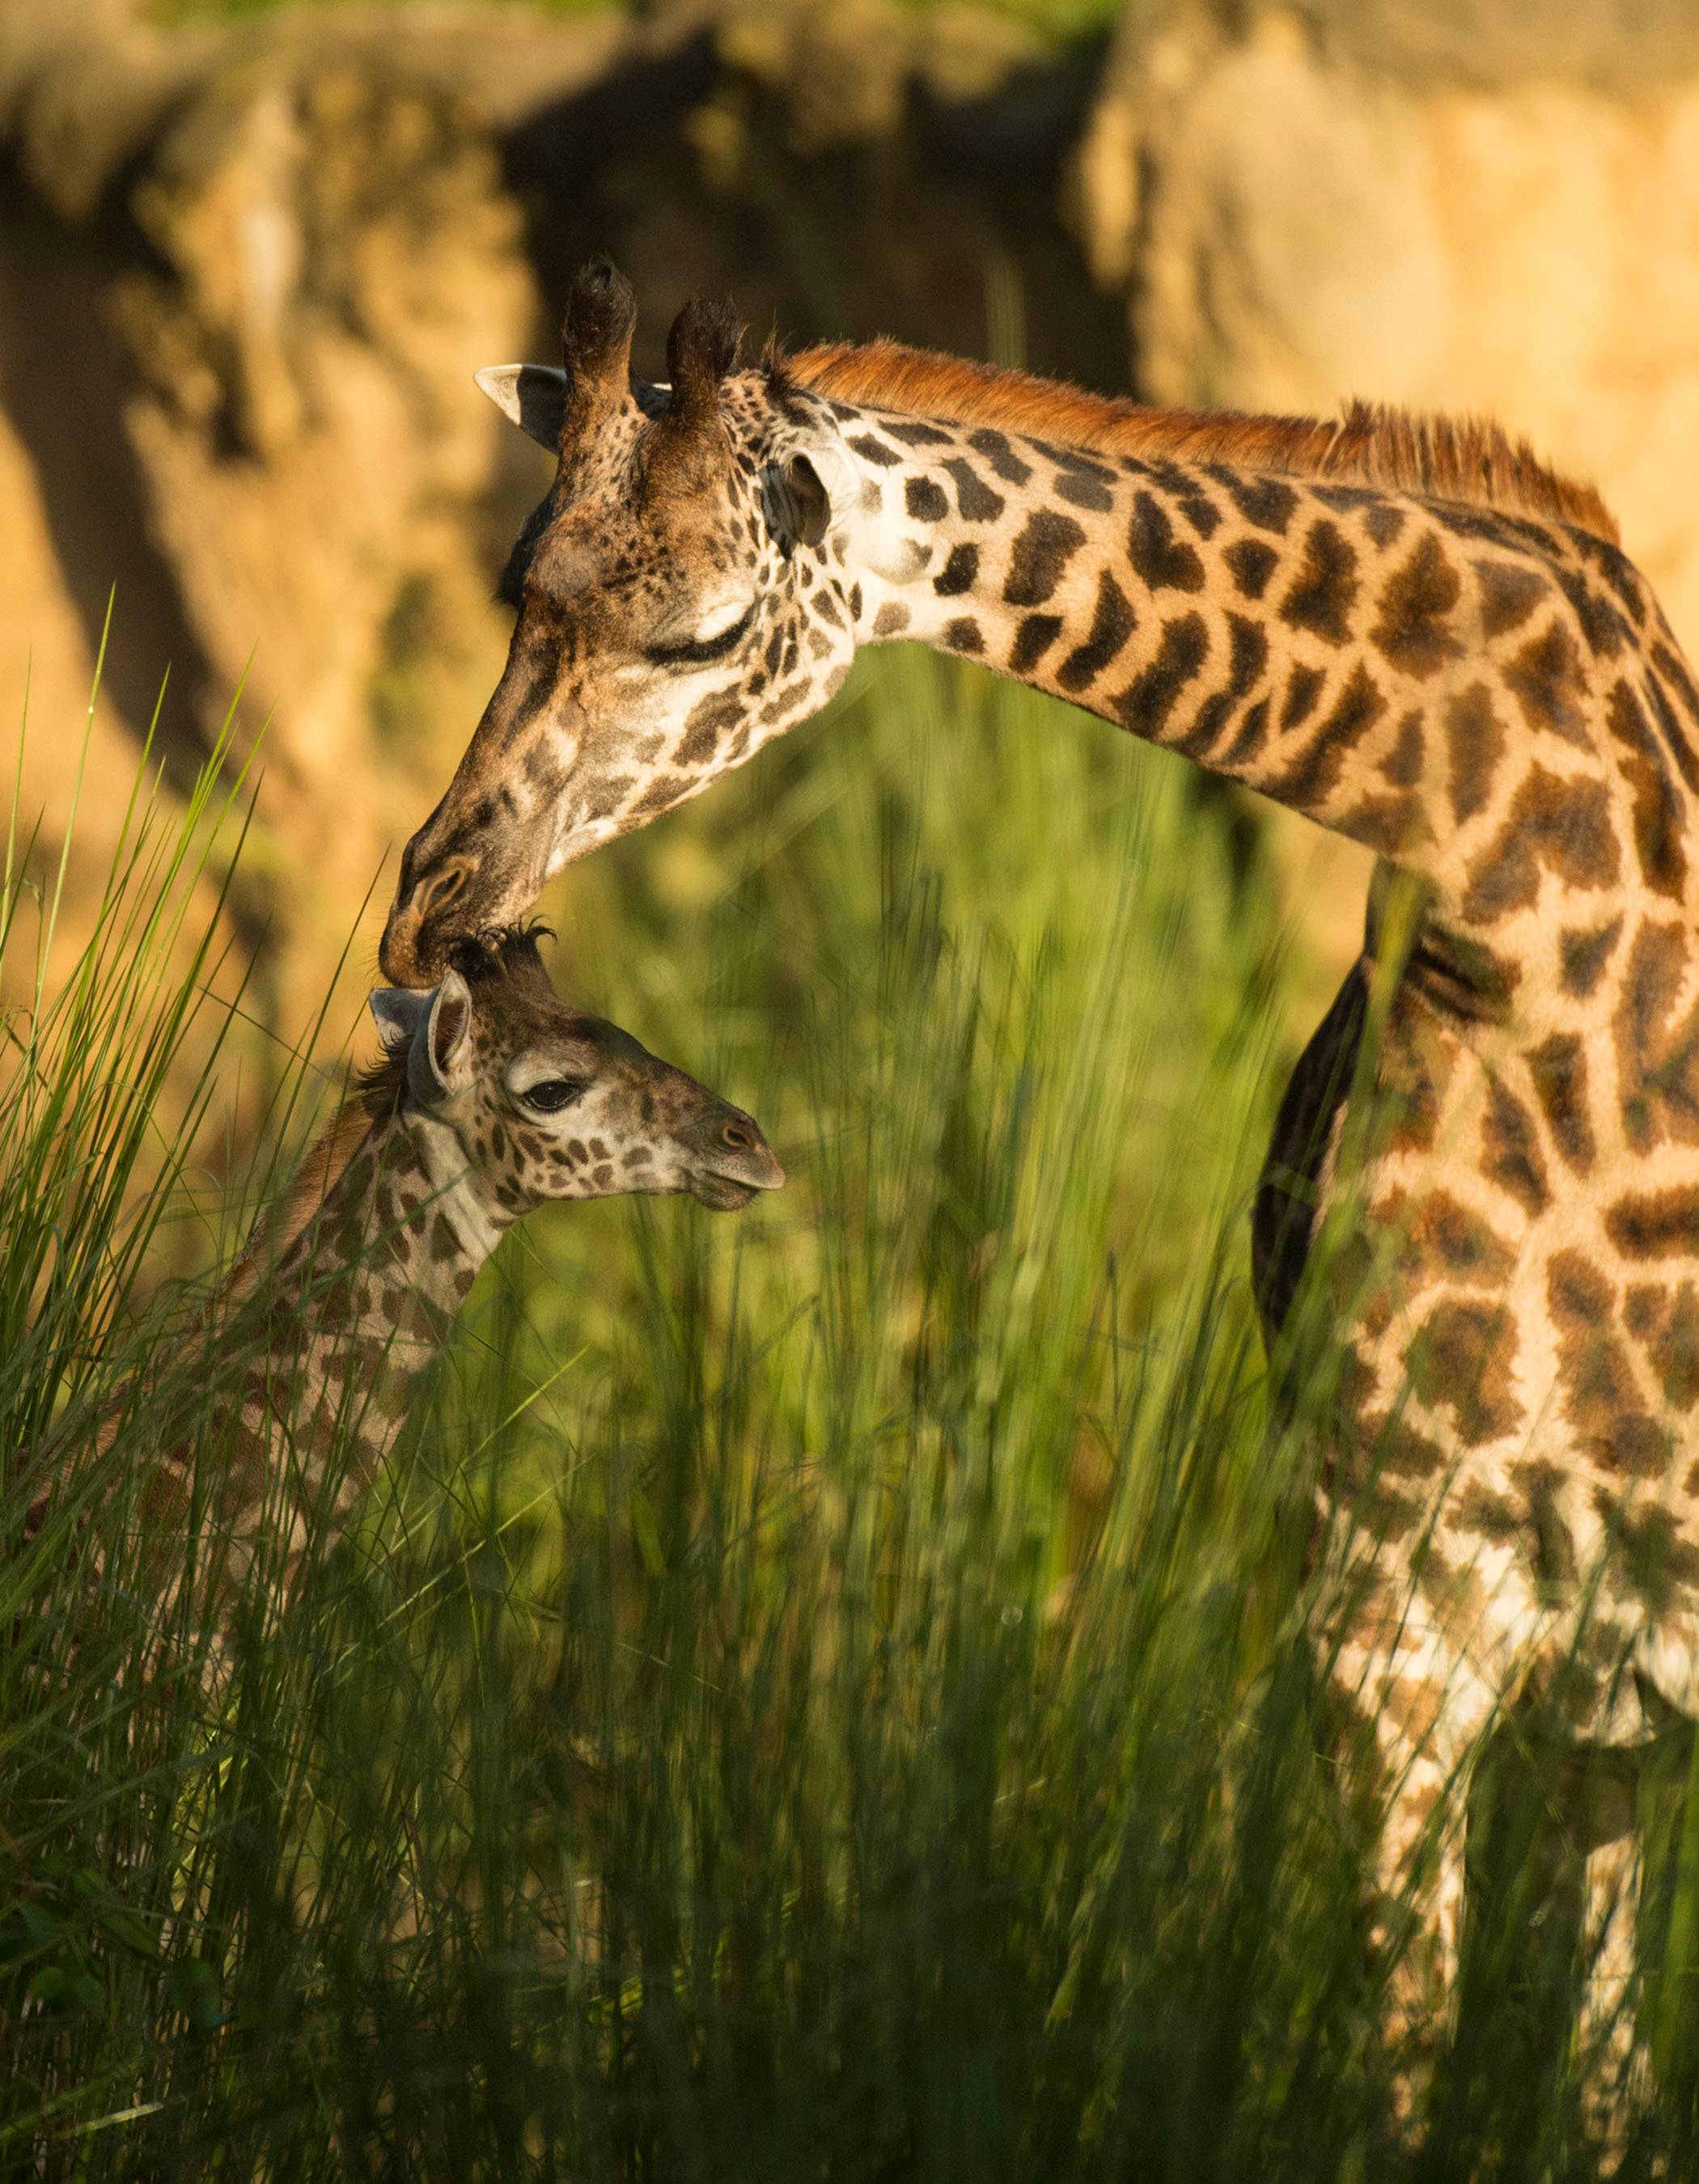 Aella the Masai giraffe calf